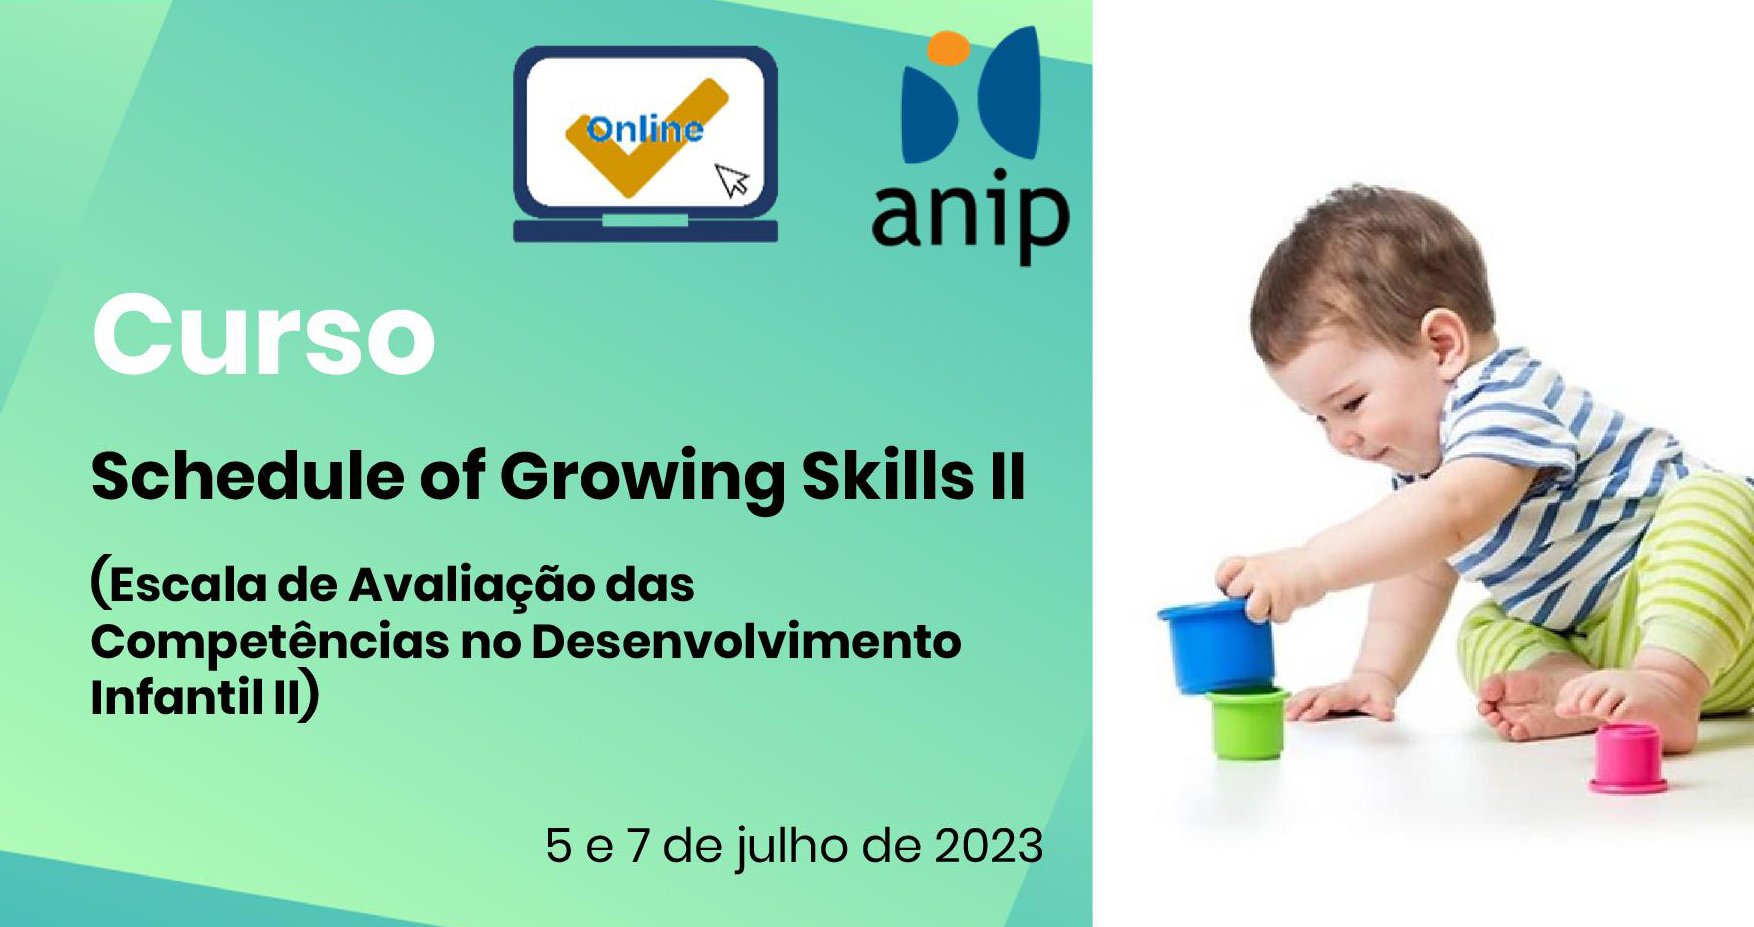 Escala de Avaliação Schedule of Growing Skills II (online)